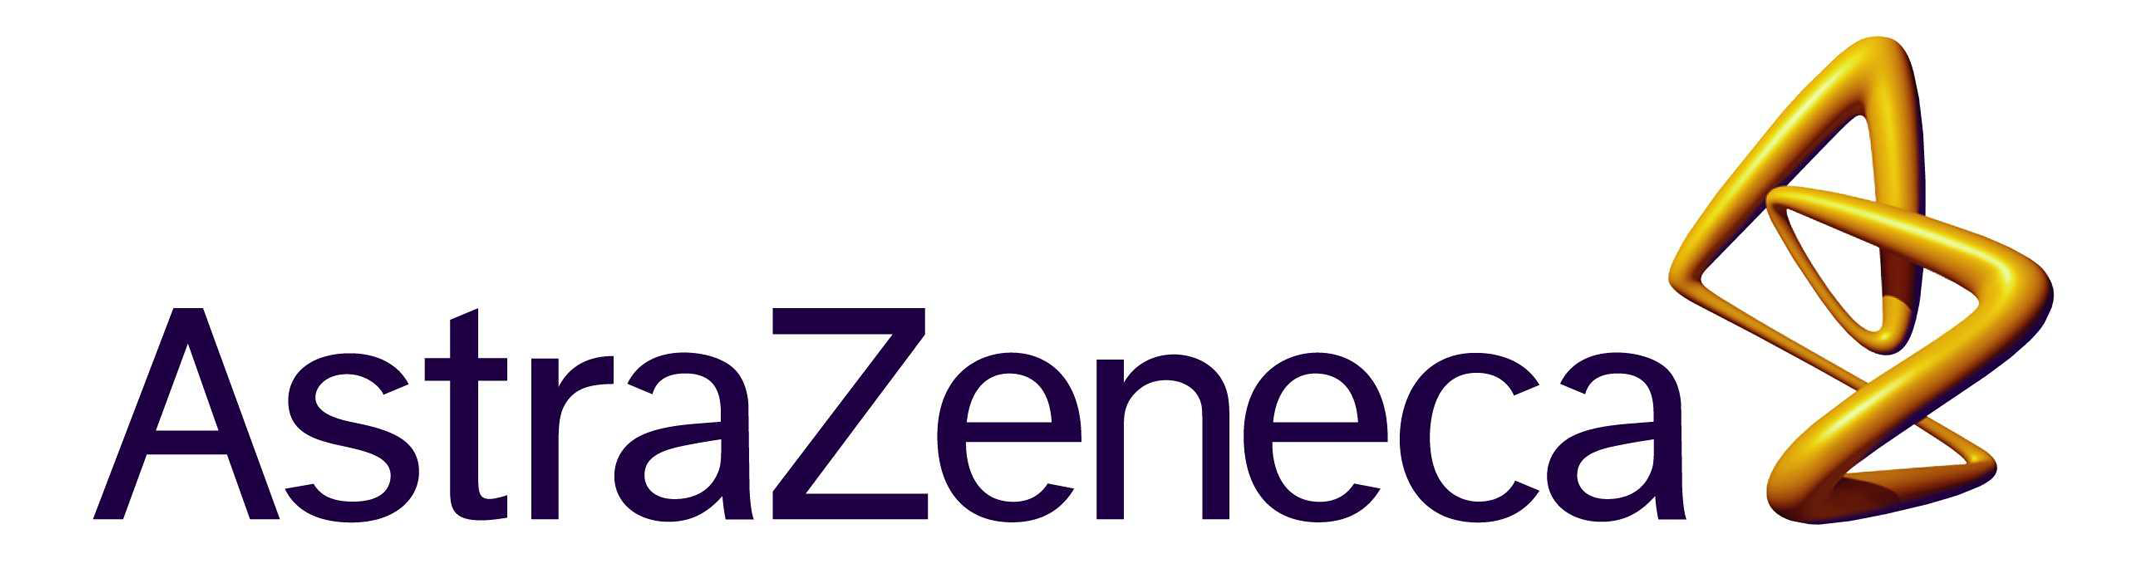 AstraZeneca-logo-3D.png